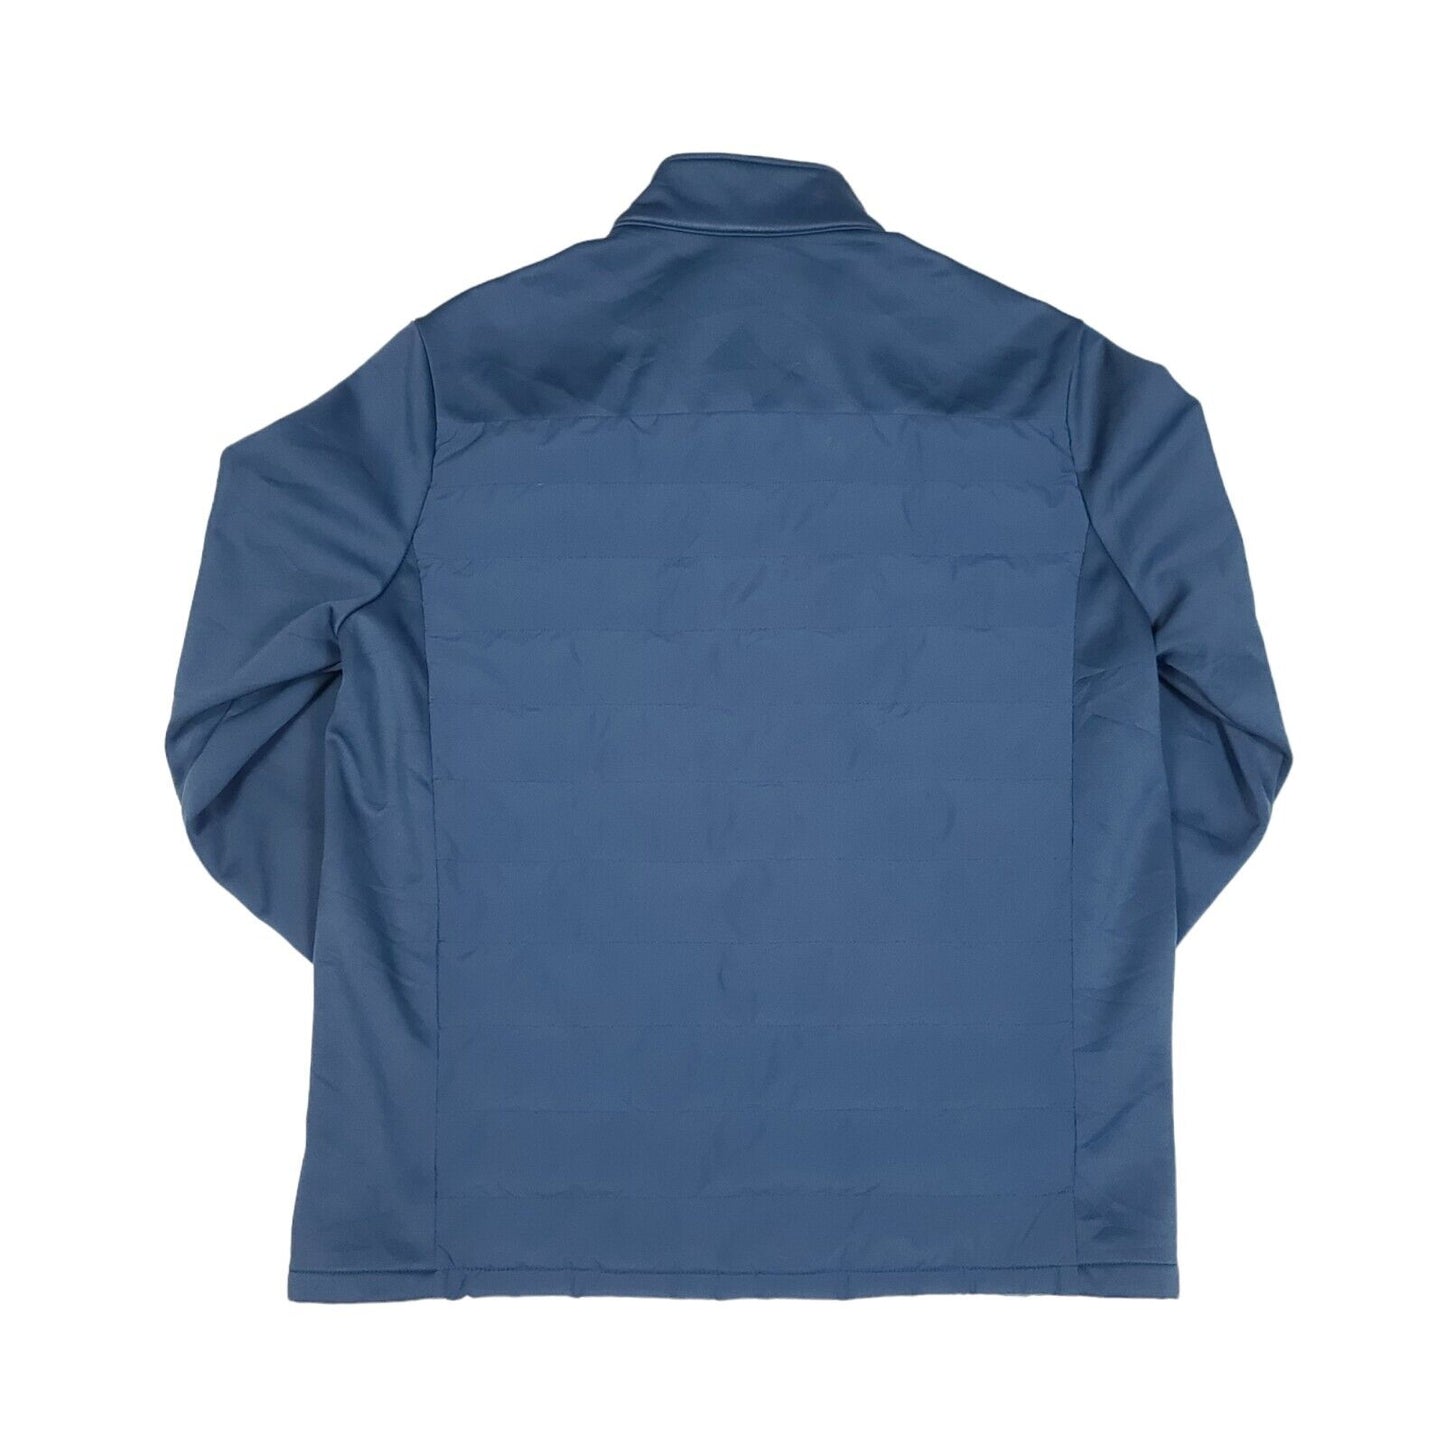 Patagonia Blue Soft Shell Full Zip Jacket